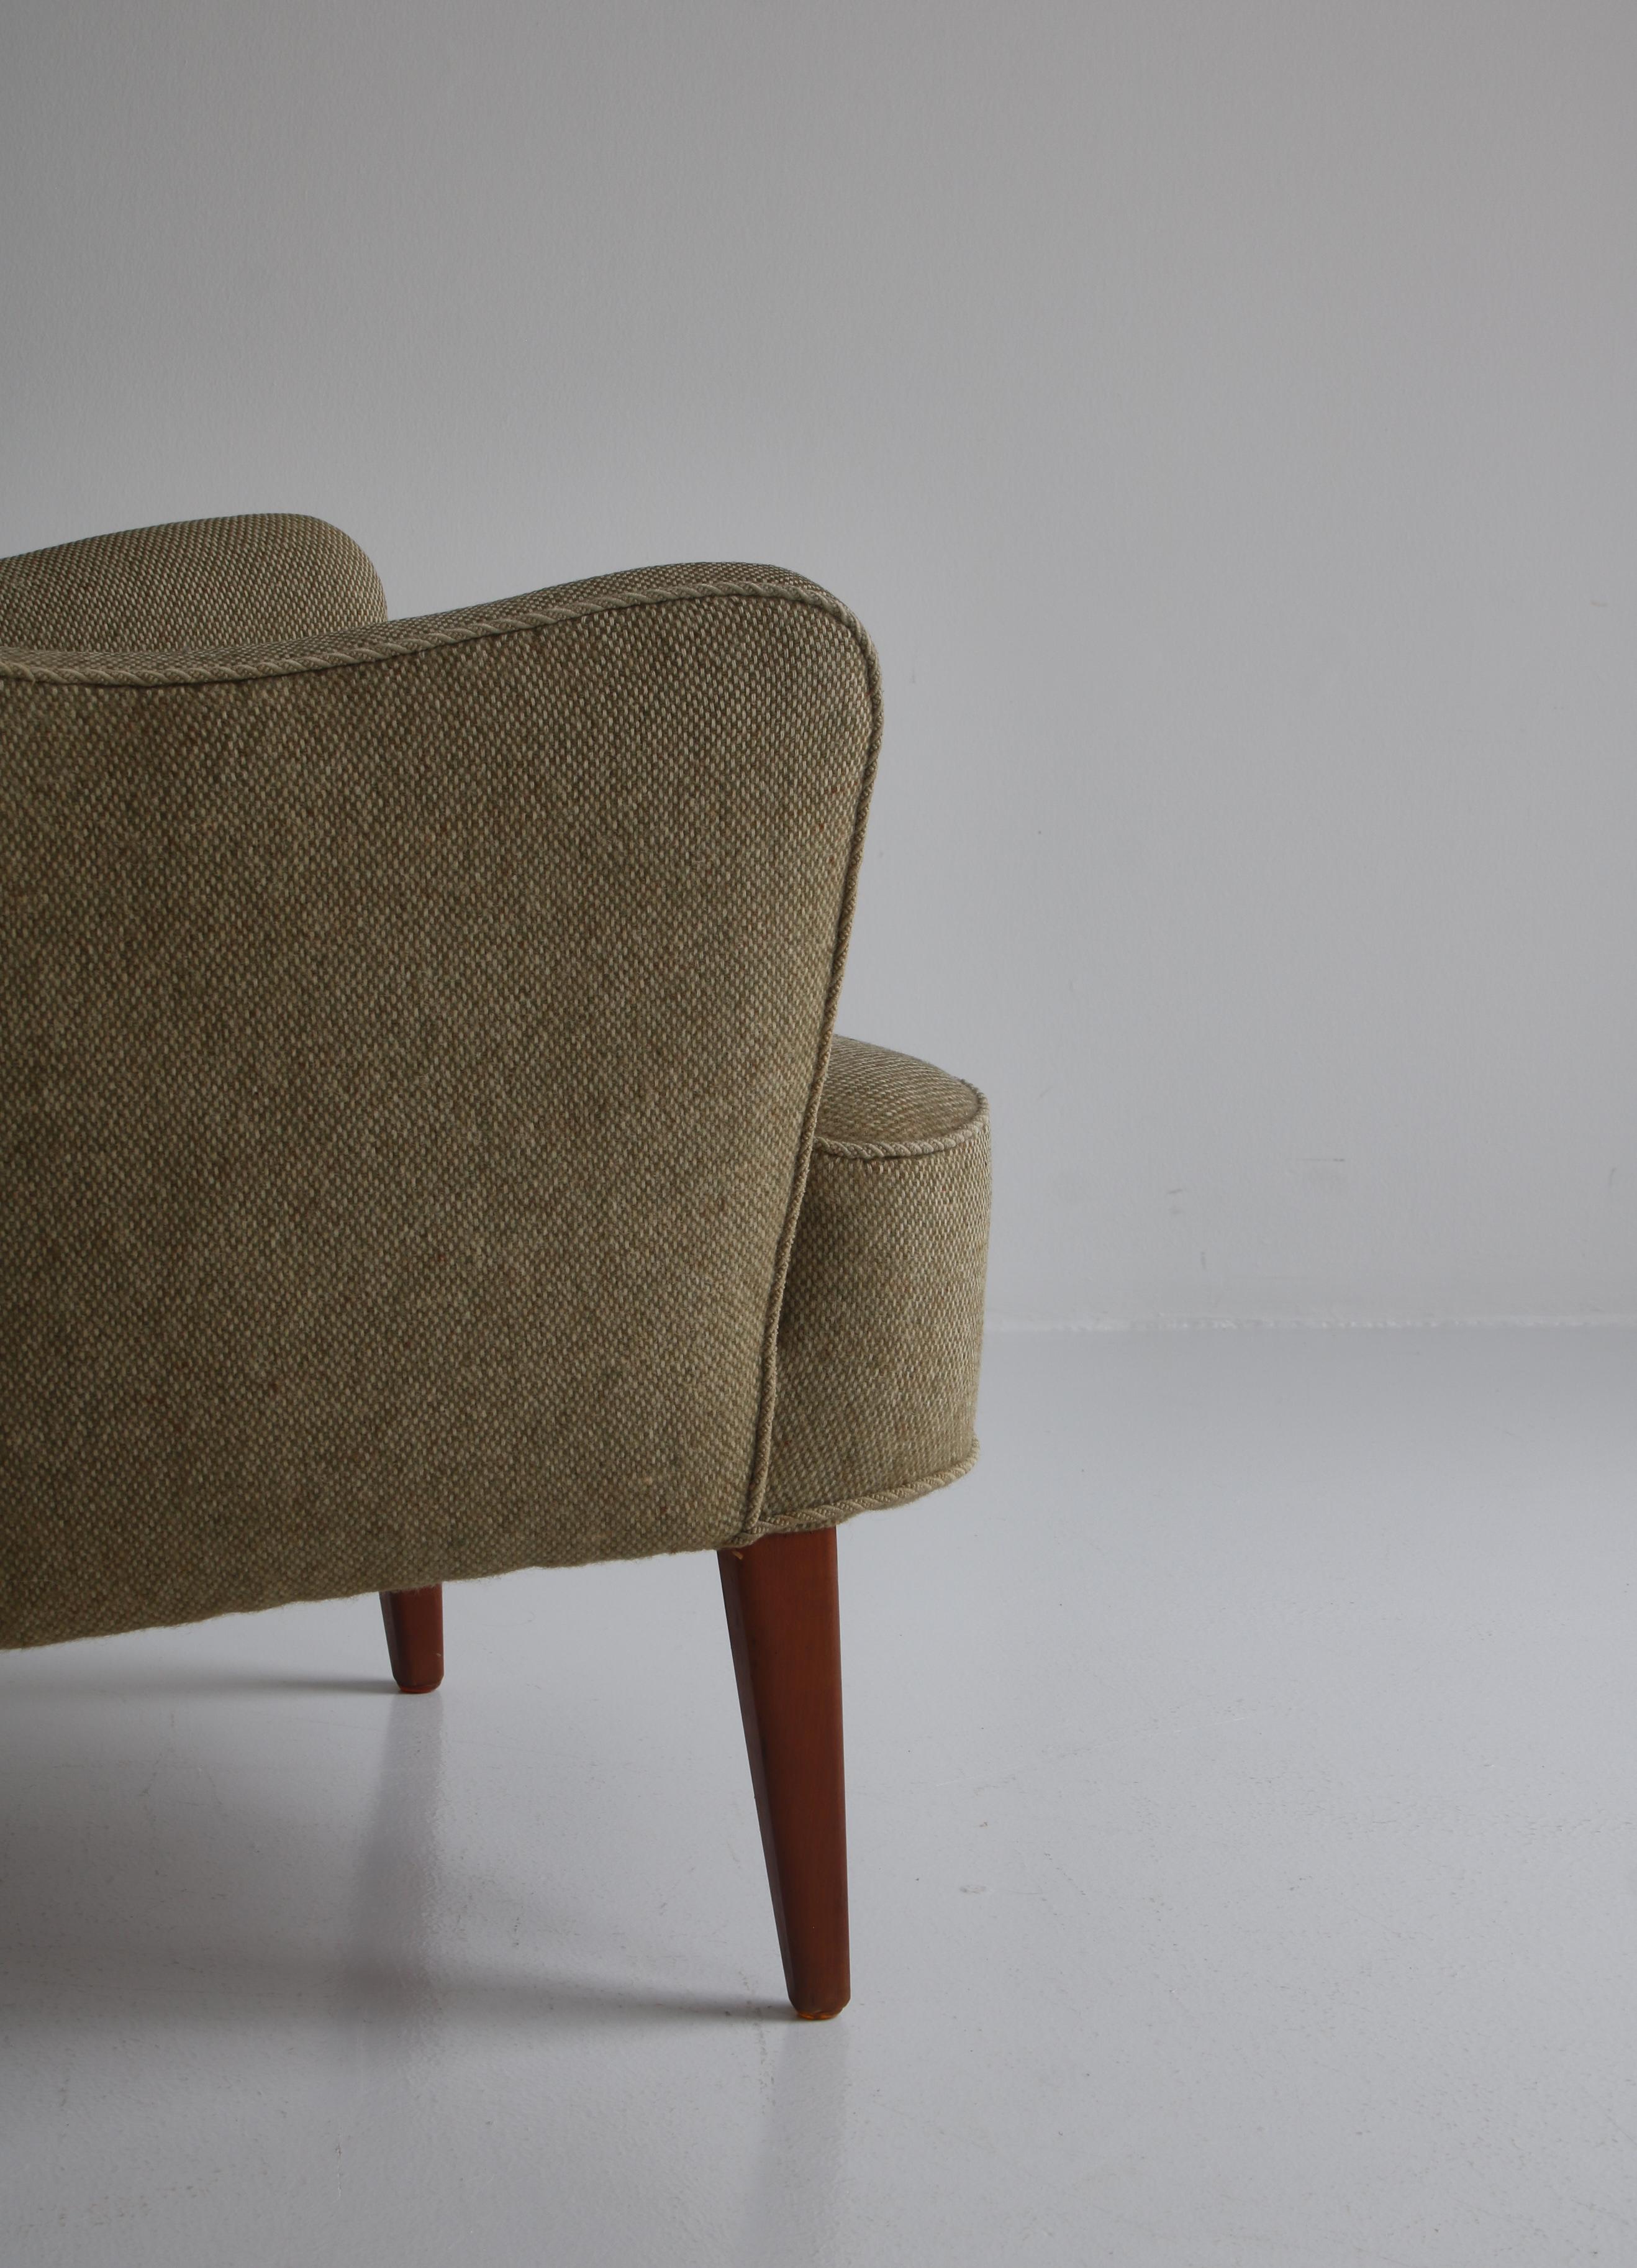 Danish Modern Easy Chair in Beech & Wool Upholstery by Hvidt & Mølgaard, 1950s For Sale 1